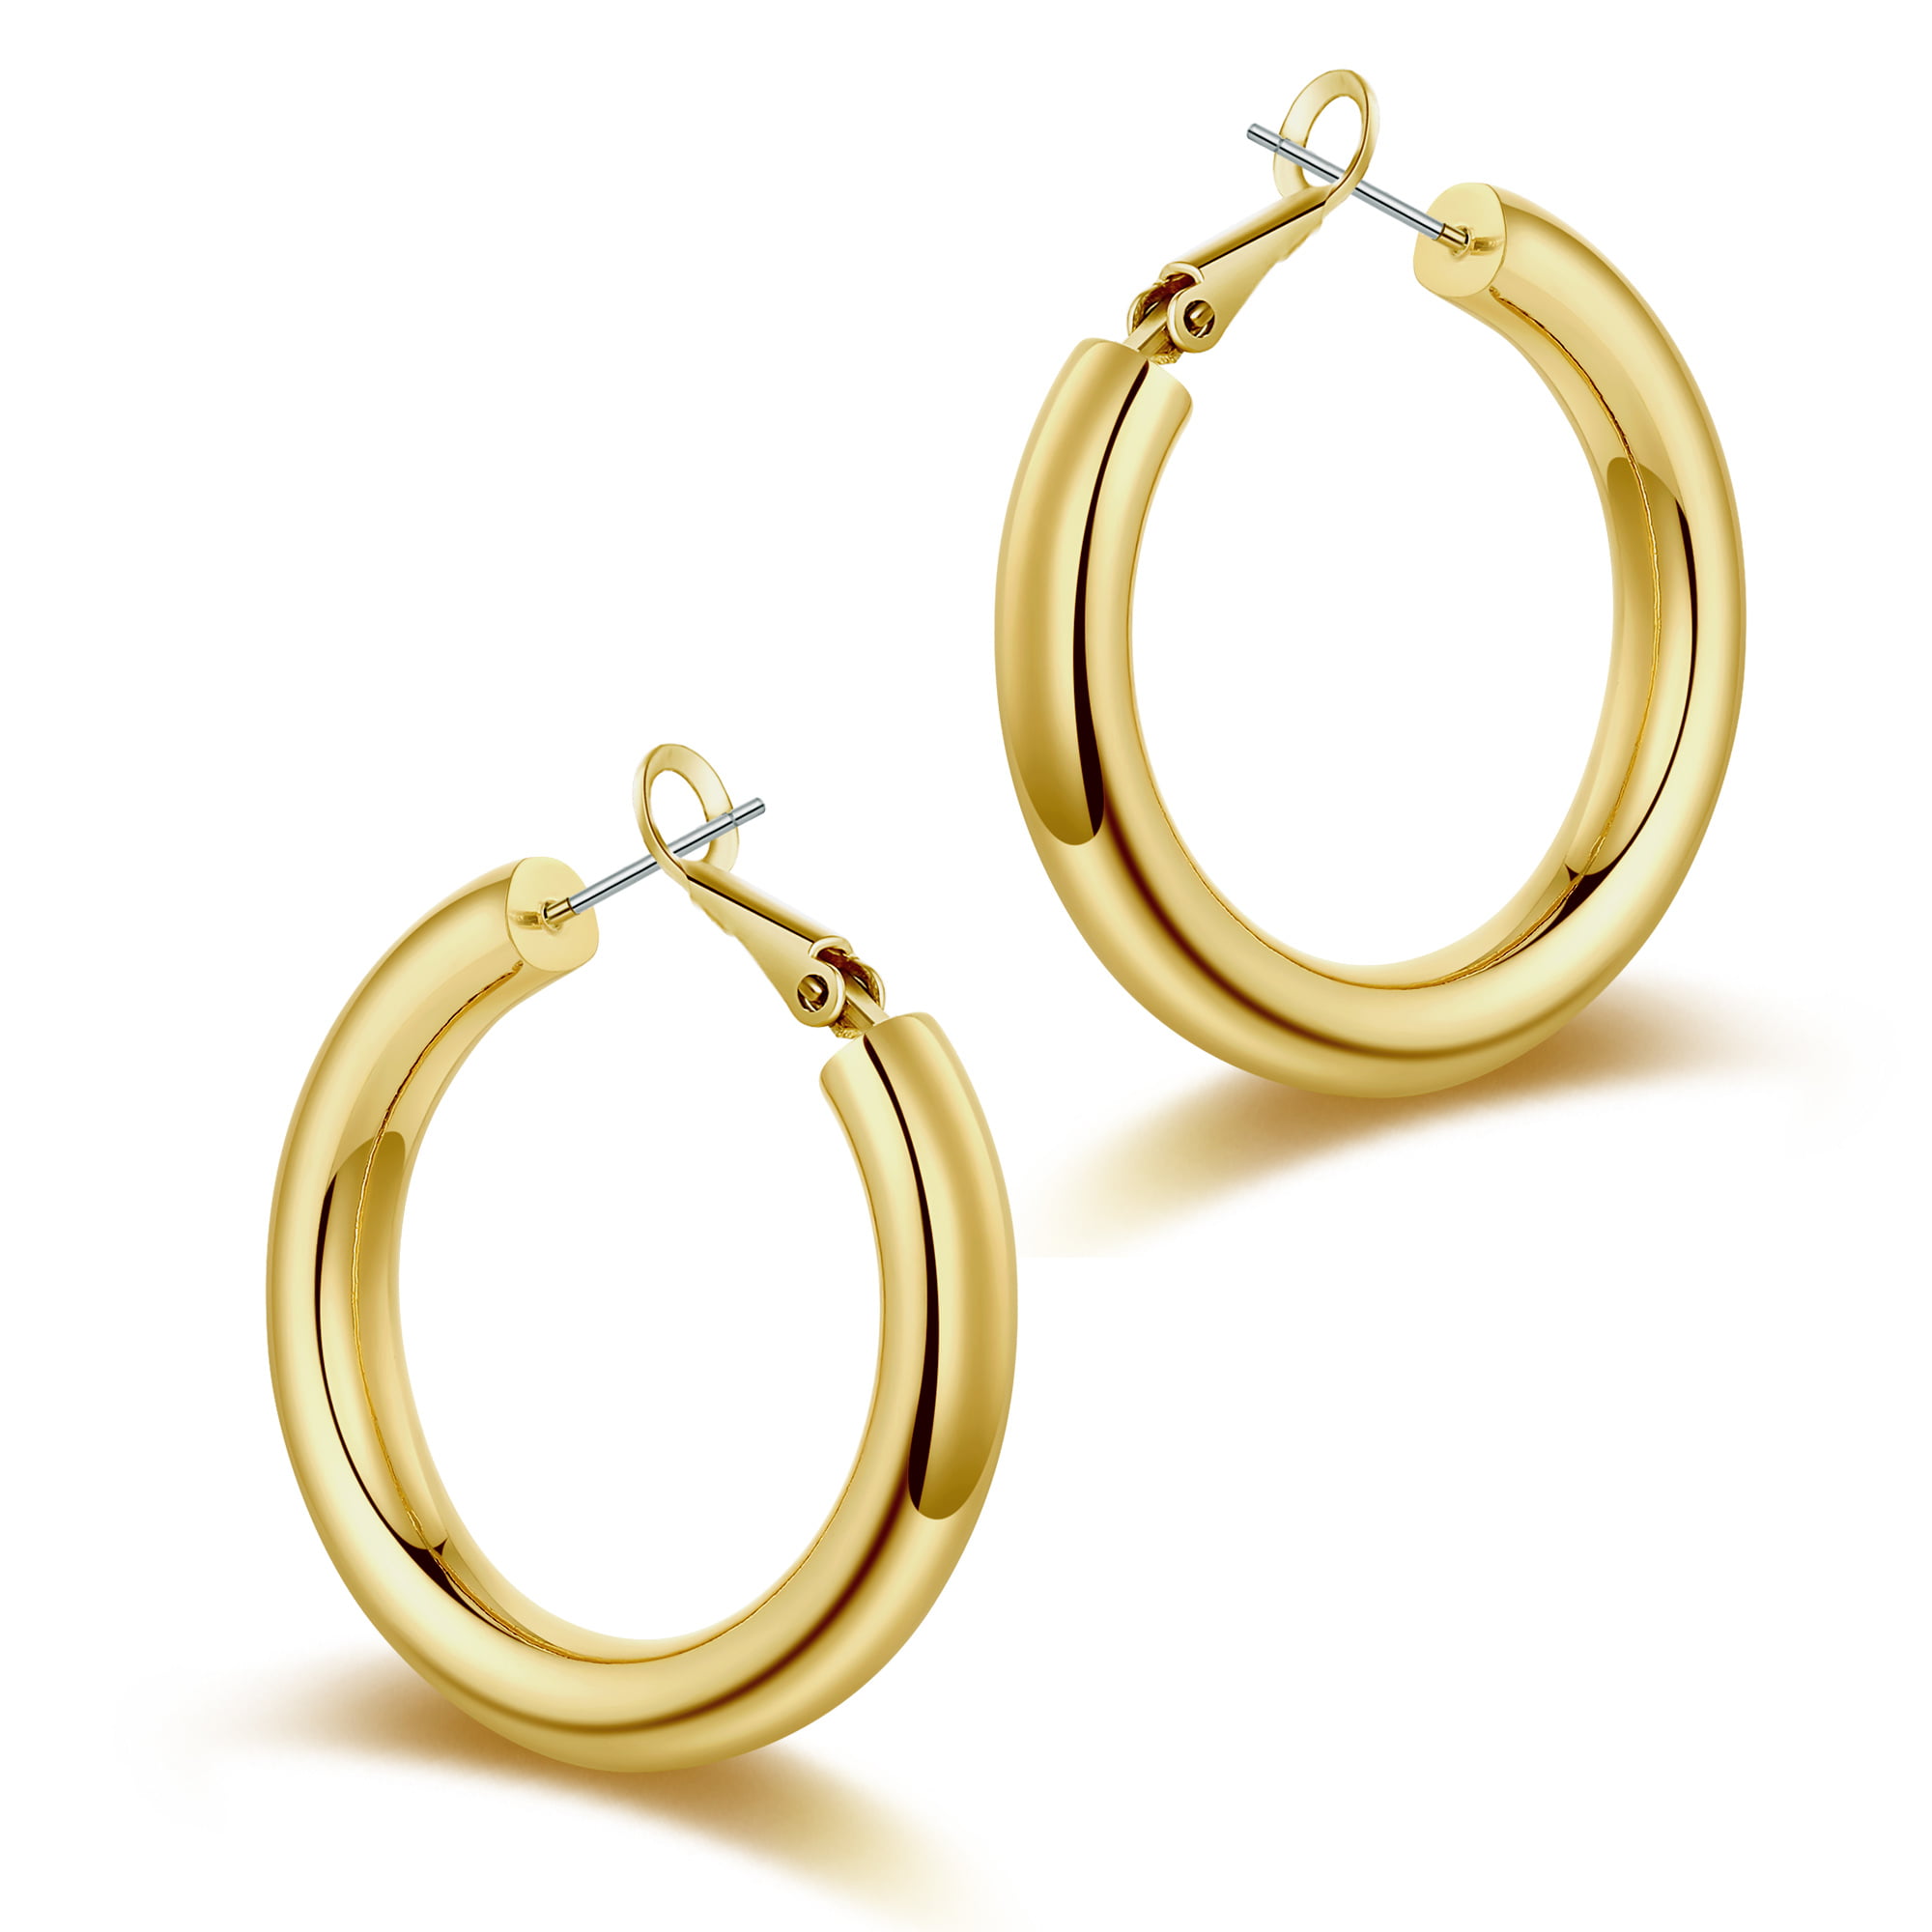 S925 Hoop Cartilage Earrings Lightweight Hoop Earrings Chain Hoops Small Hoops Earrings for Women Girls 